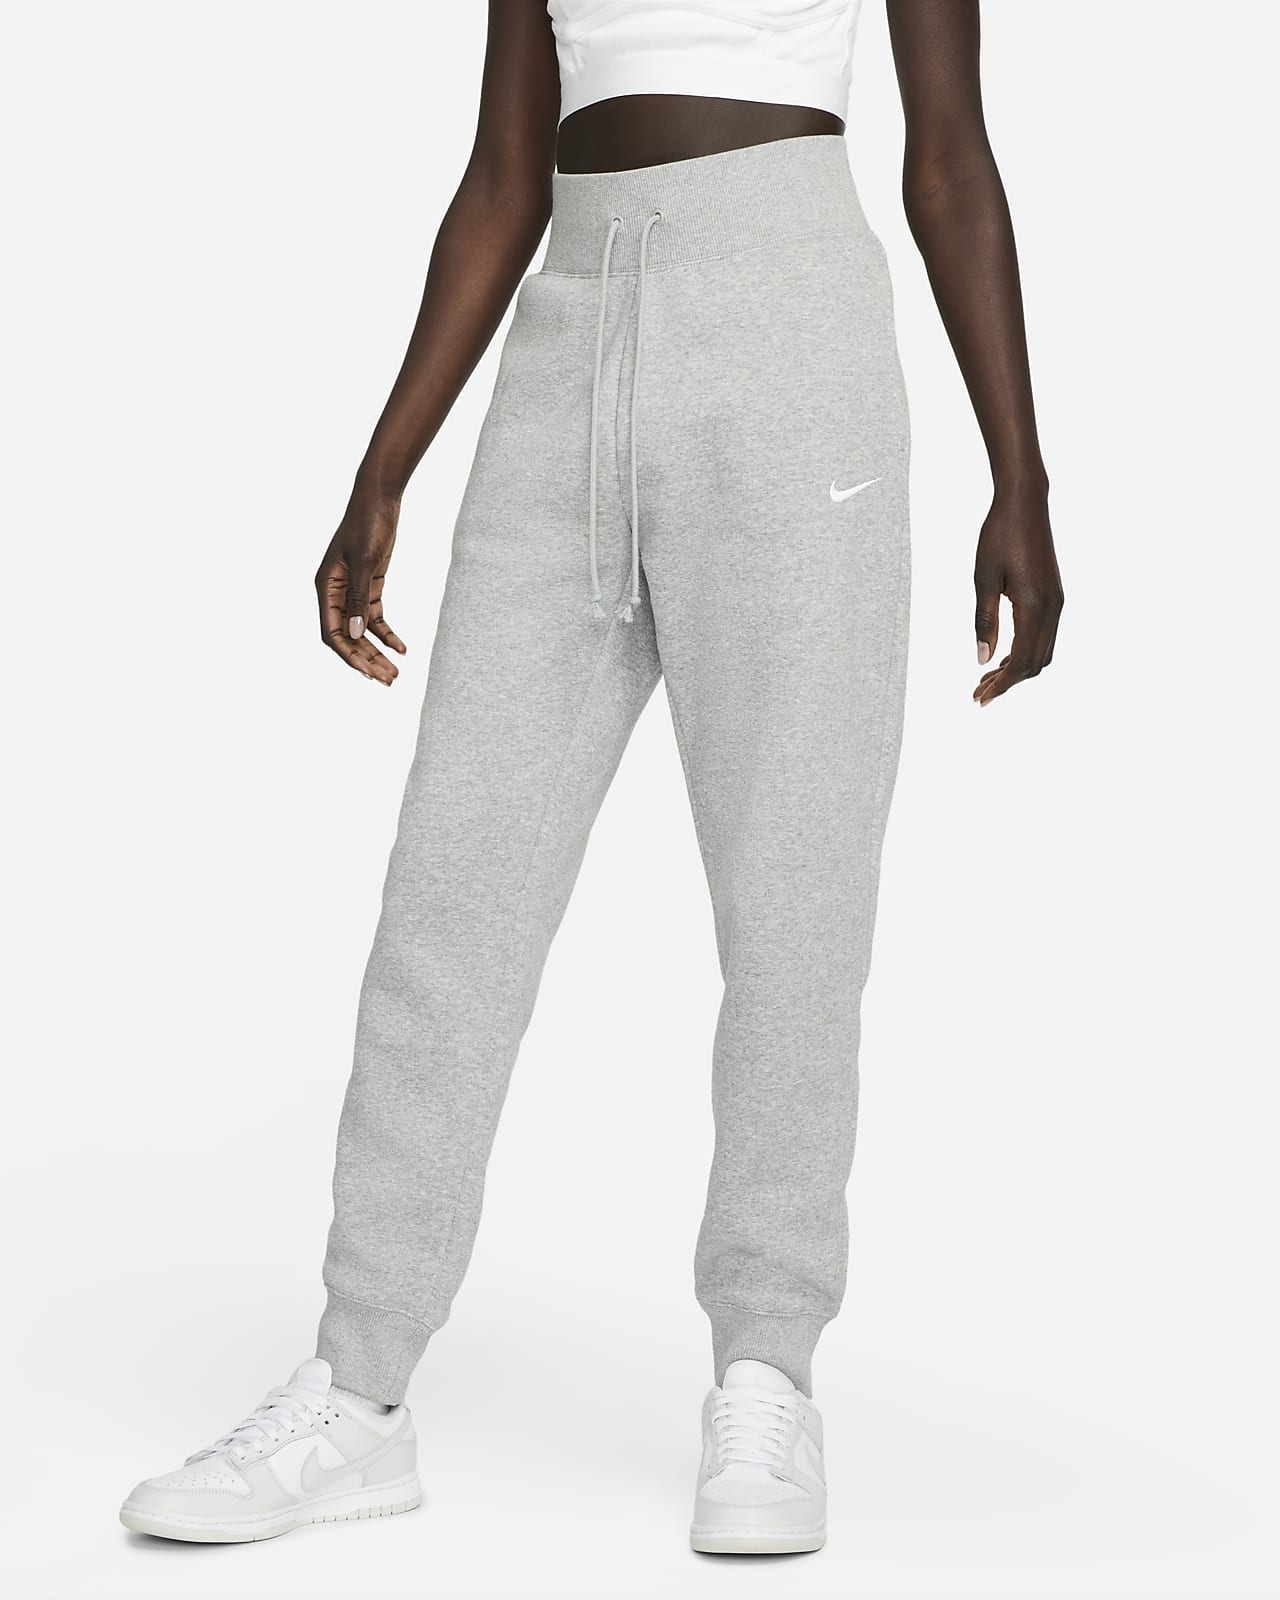 Phoenix jogger, Nike